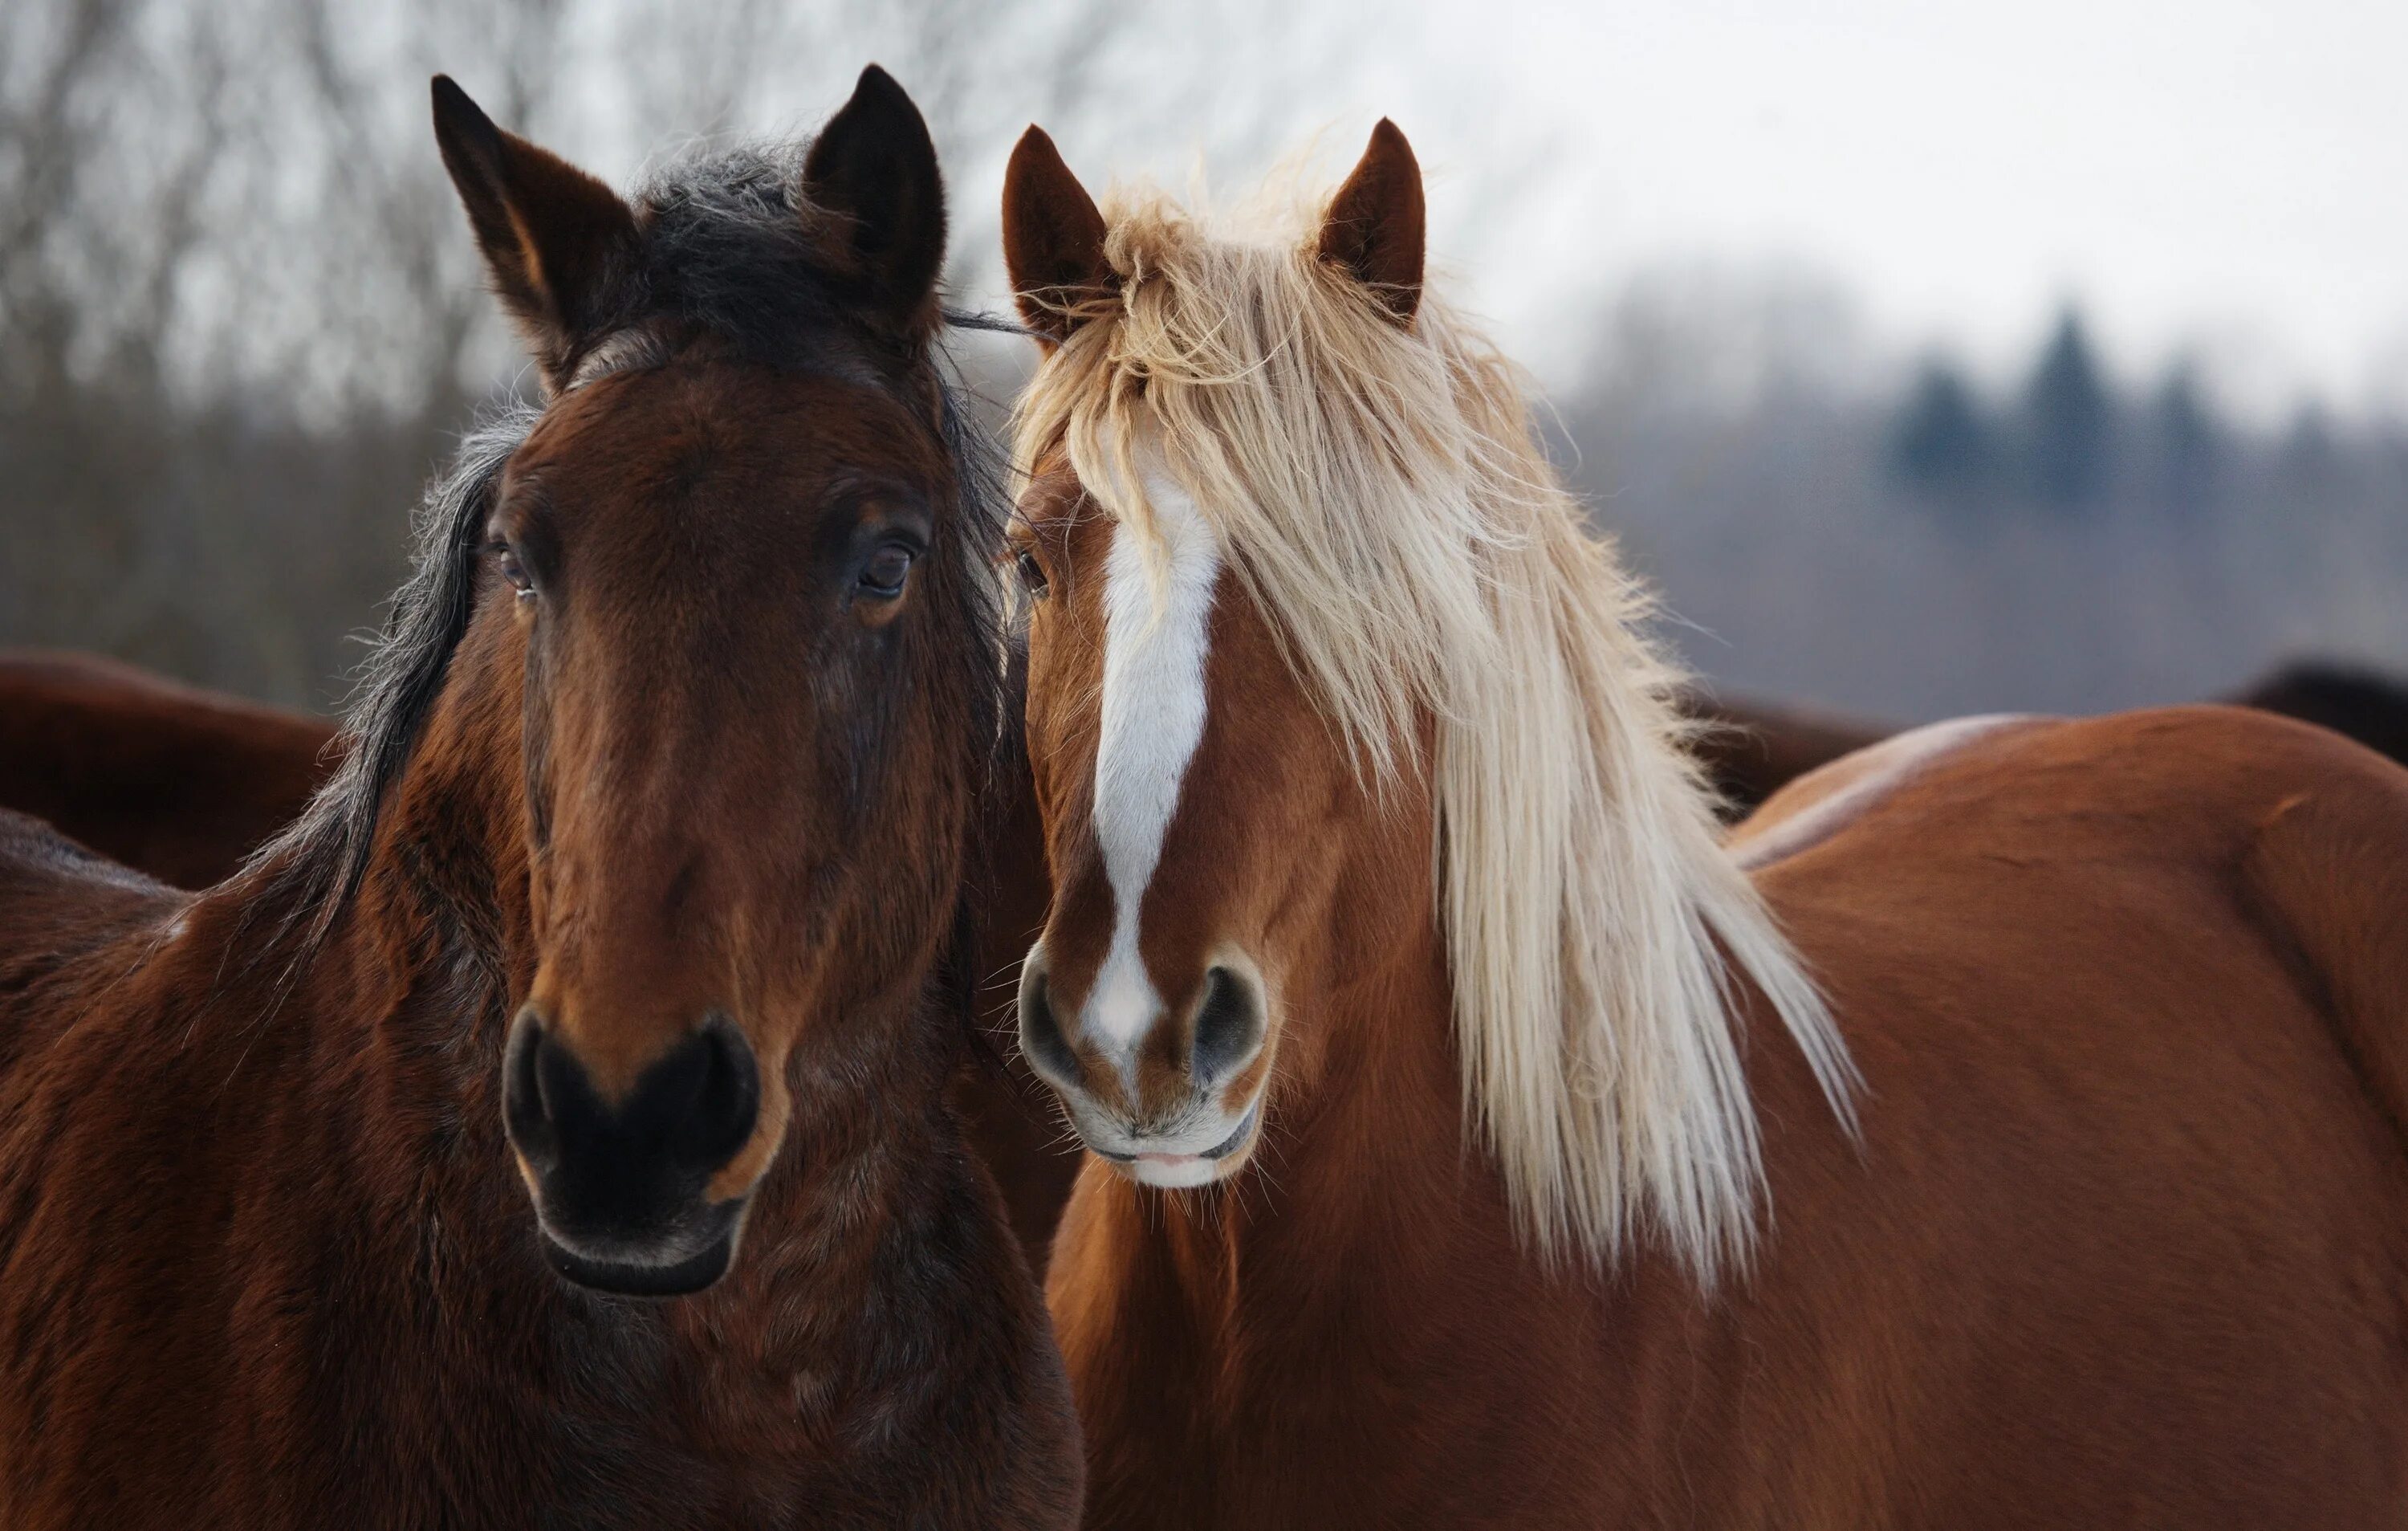 Horses are beautiful. Красивые лошадки. Очень красивые лошади. Коричневая лошадь. Пара лошадей.